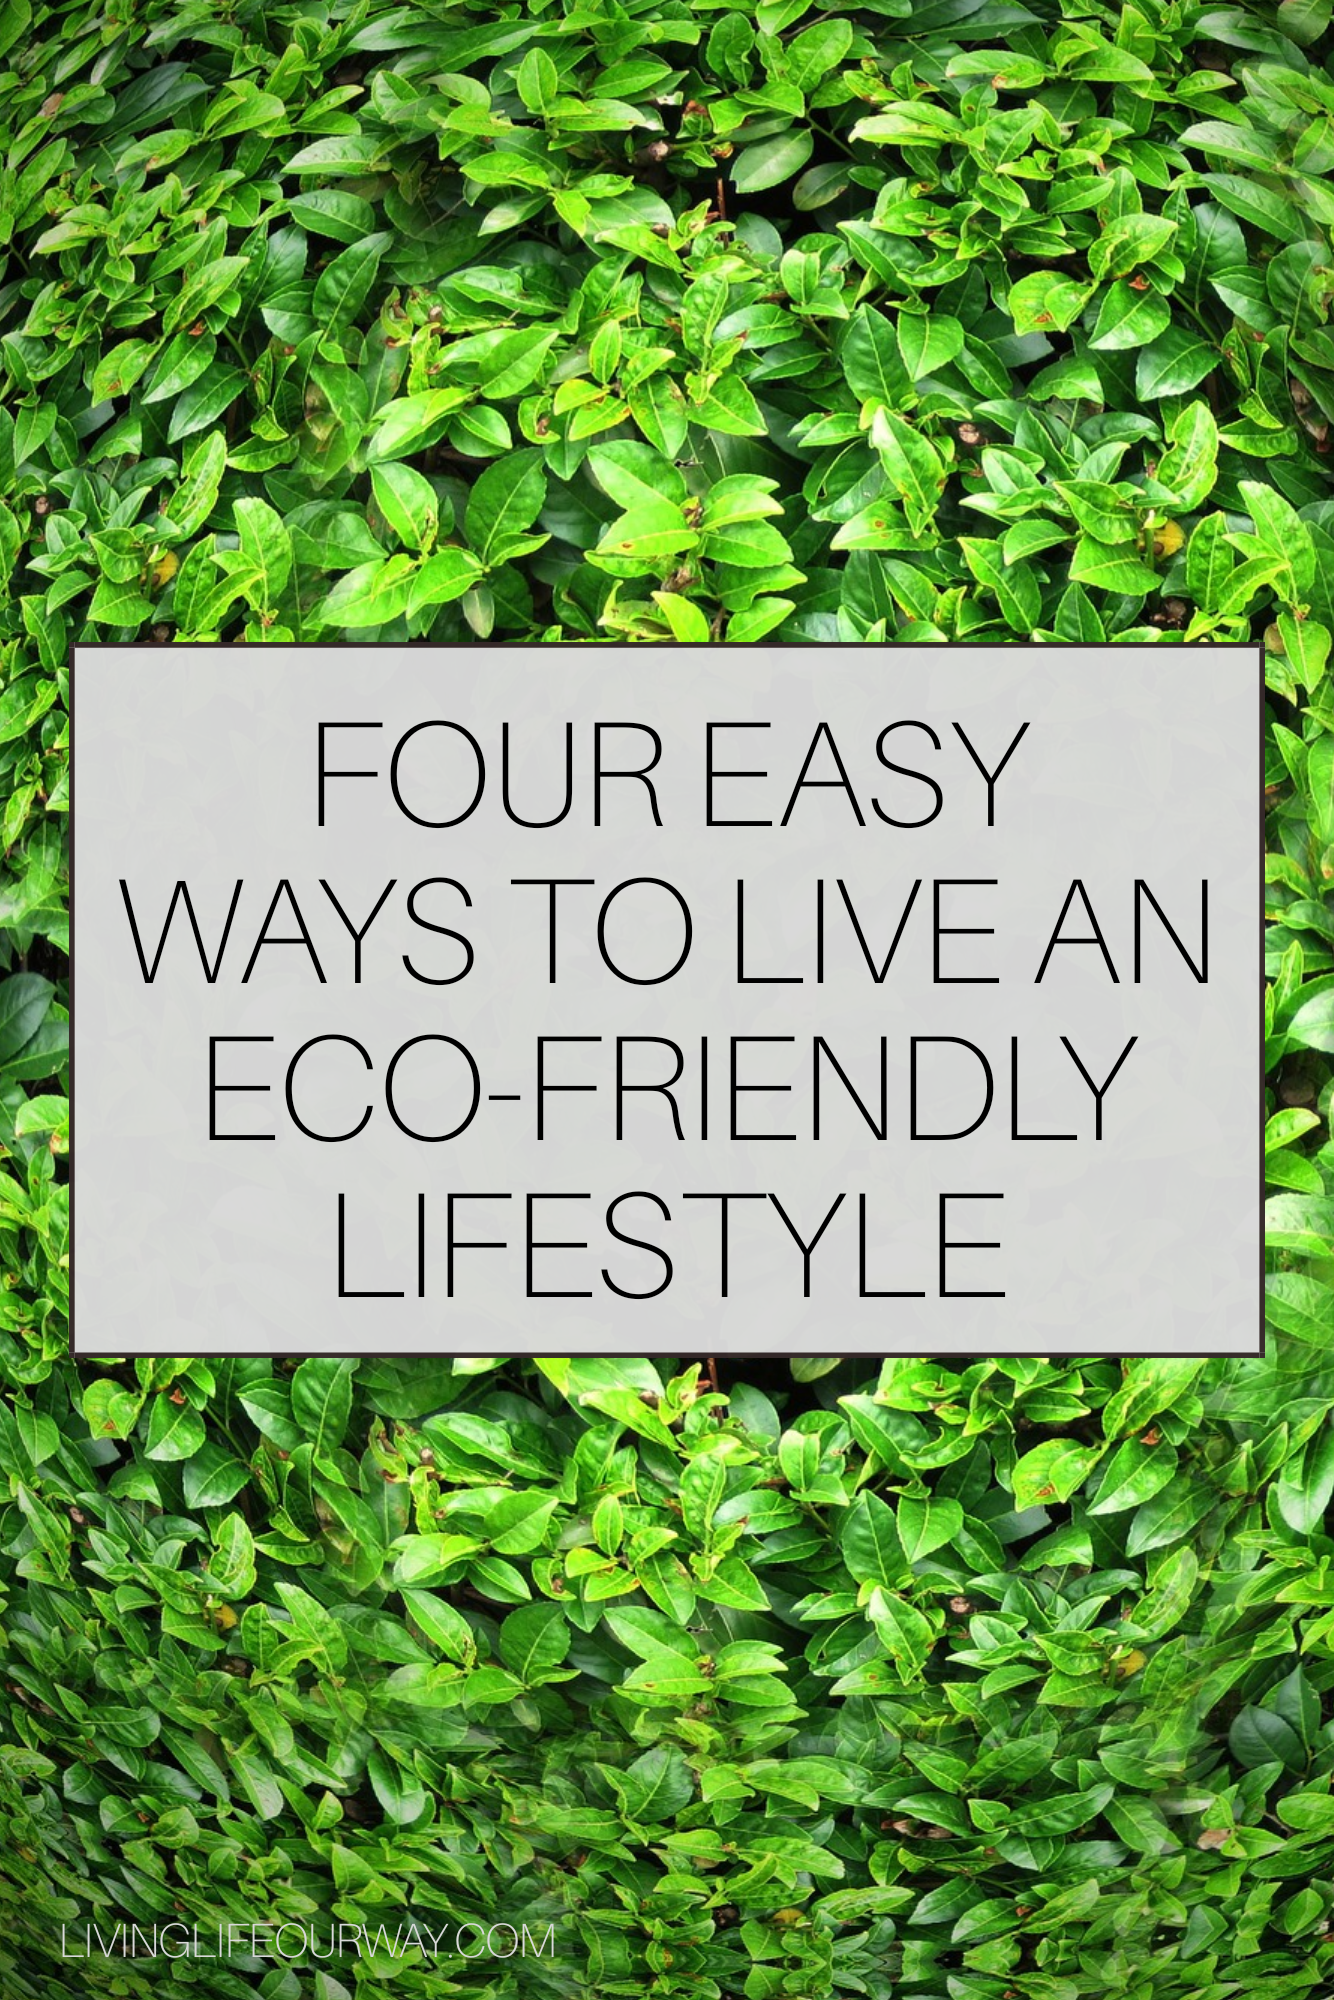 Four easy ways to live an eco-friendly lifestyle